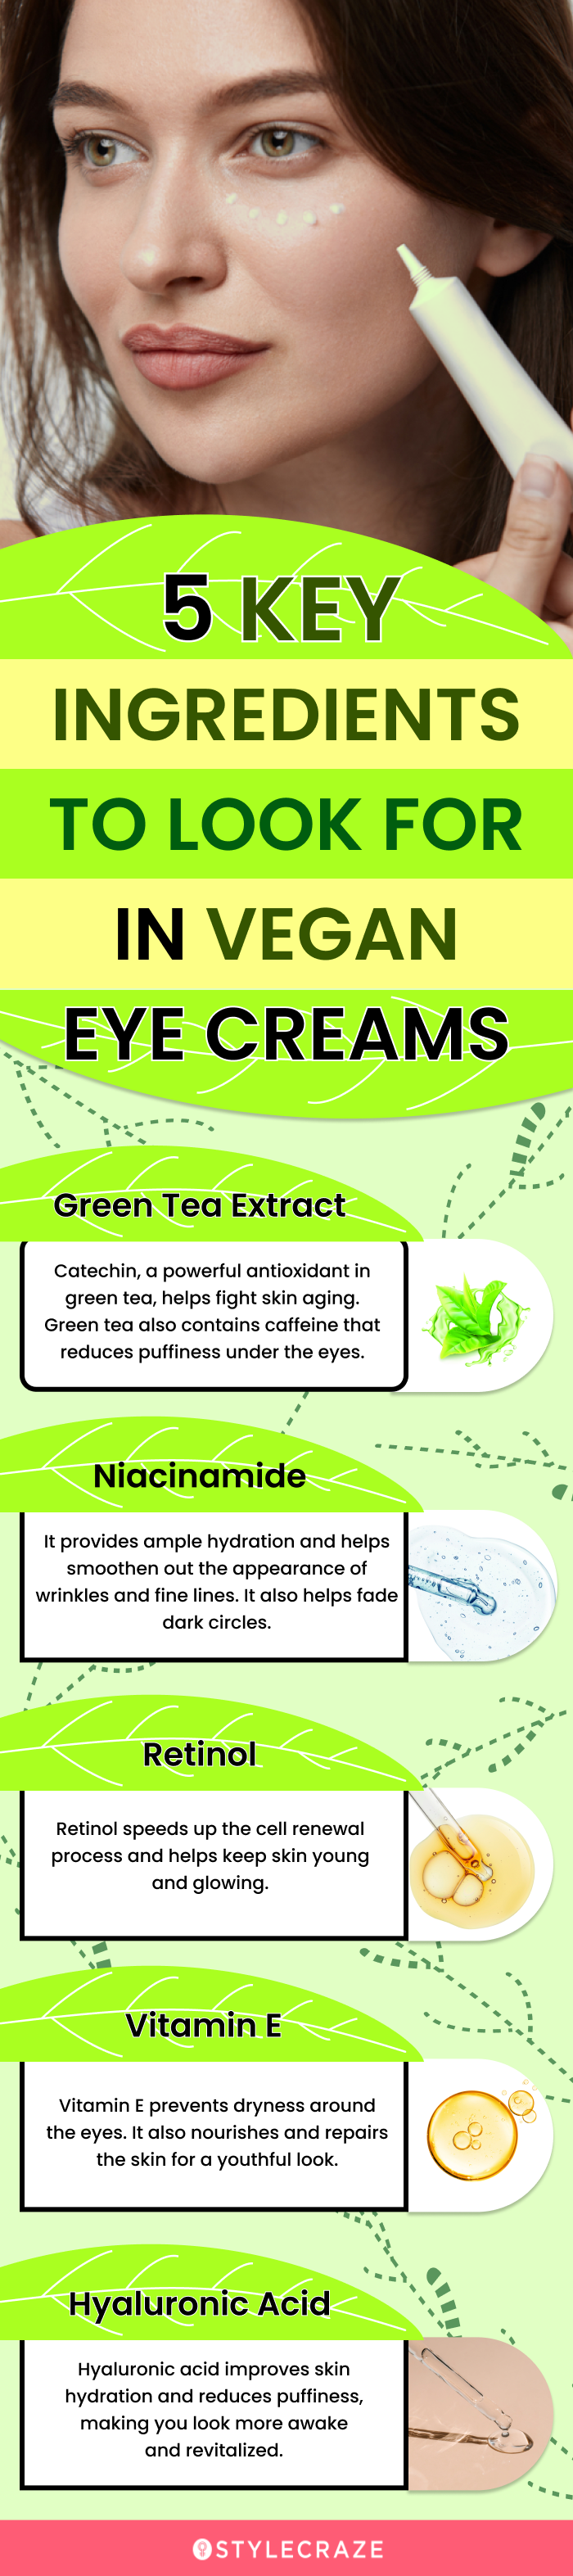 5 Key Ingredients To Look For In Vegan Eye Creams (infographic)